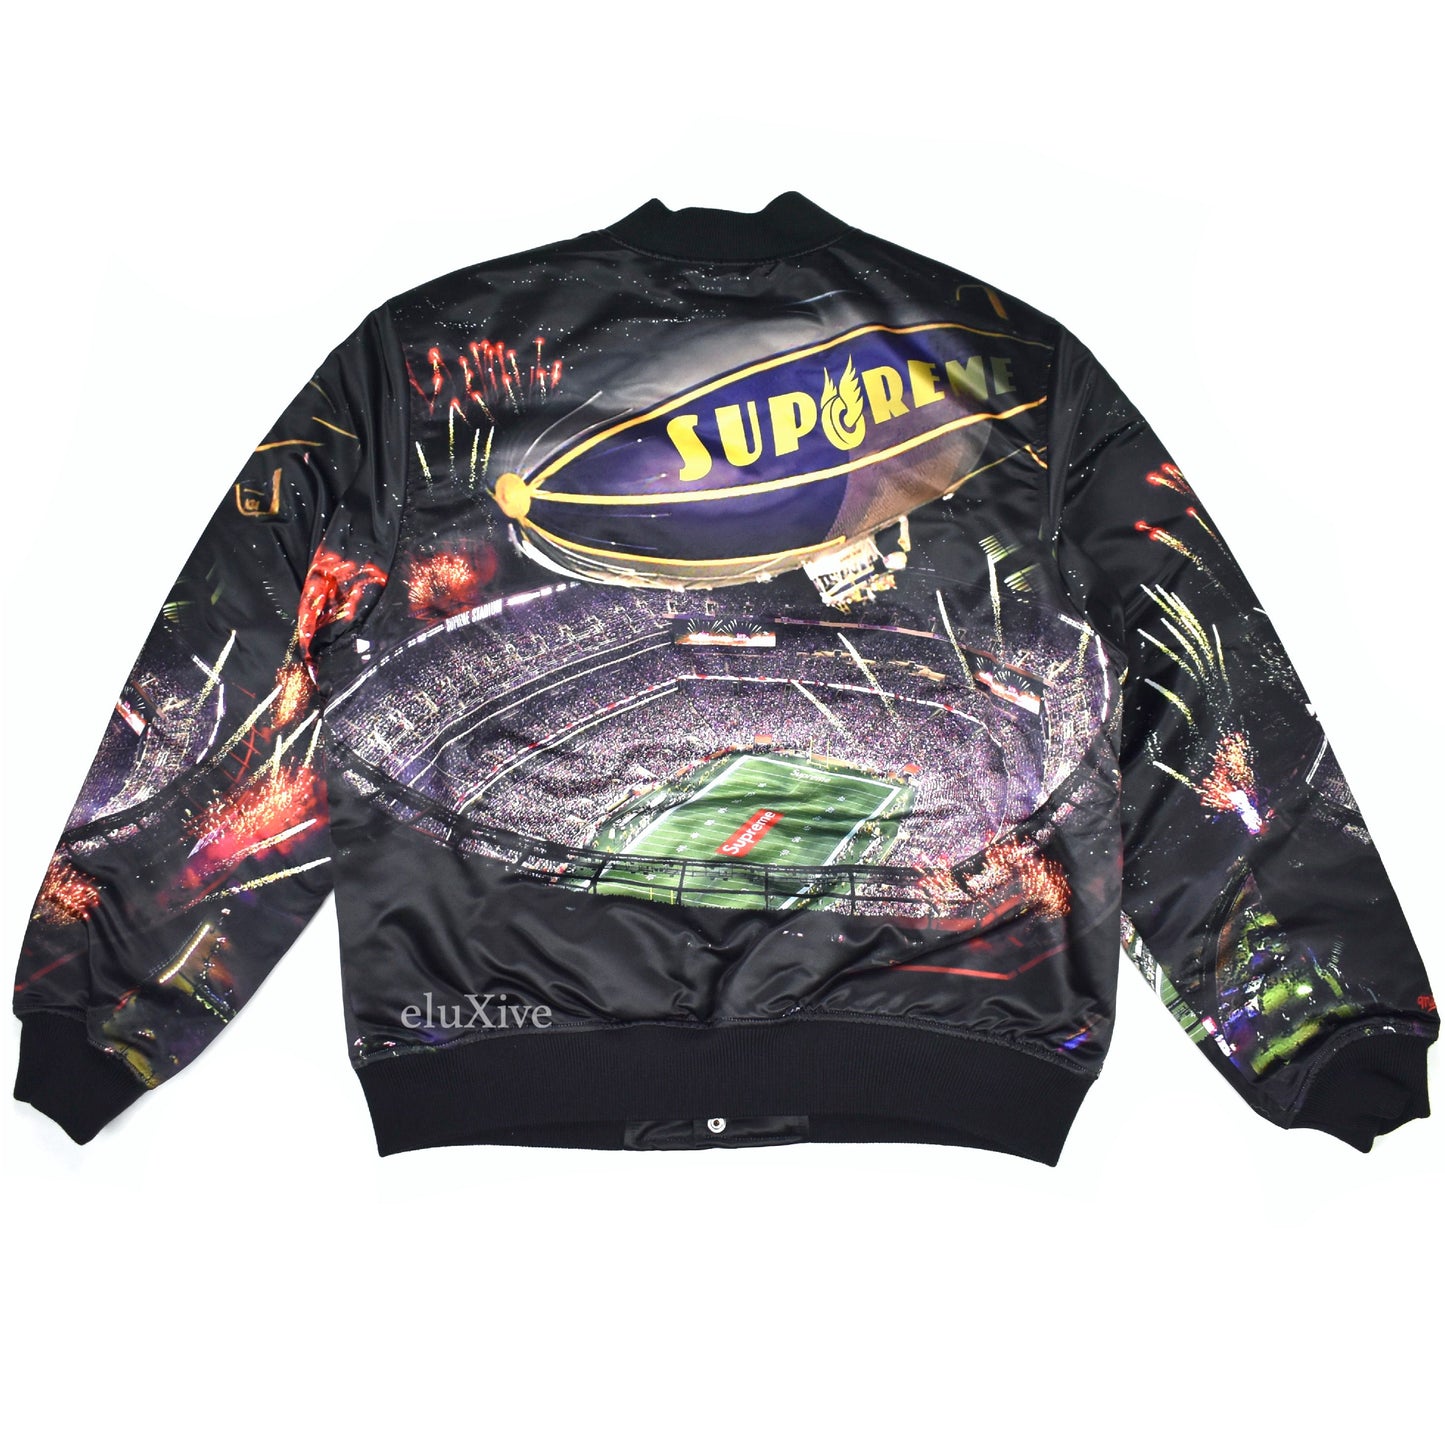 Supreme x Mitchell & Ness - Blimp Logo Stadium Jacket